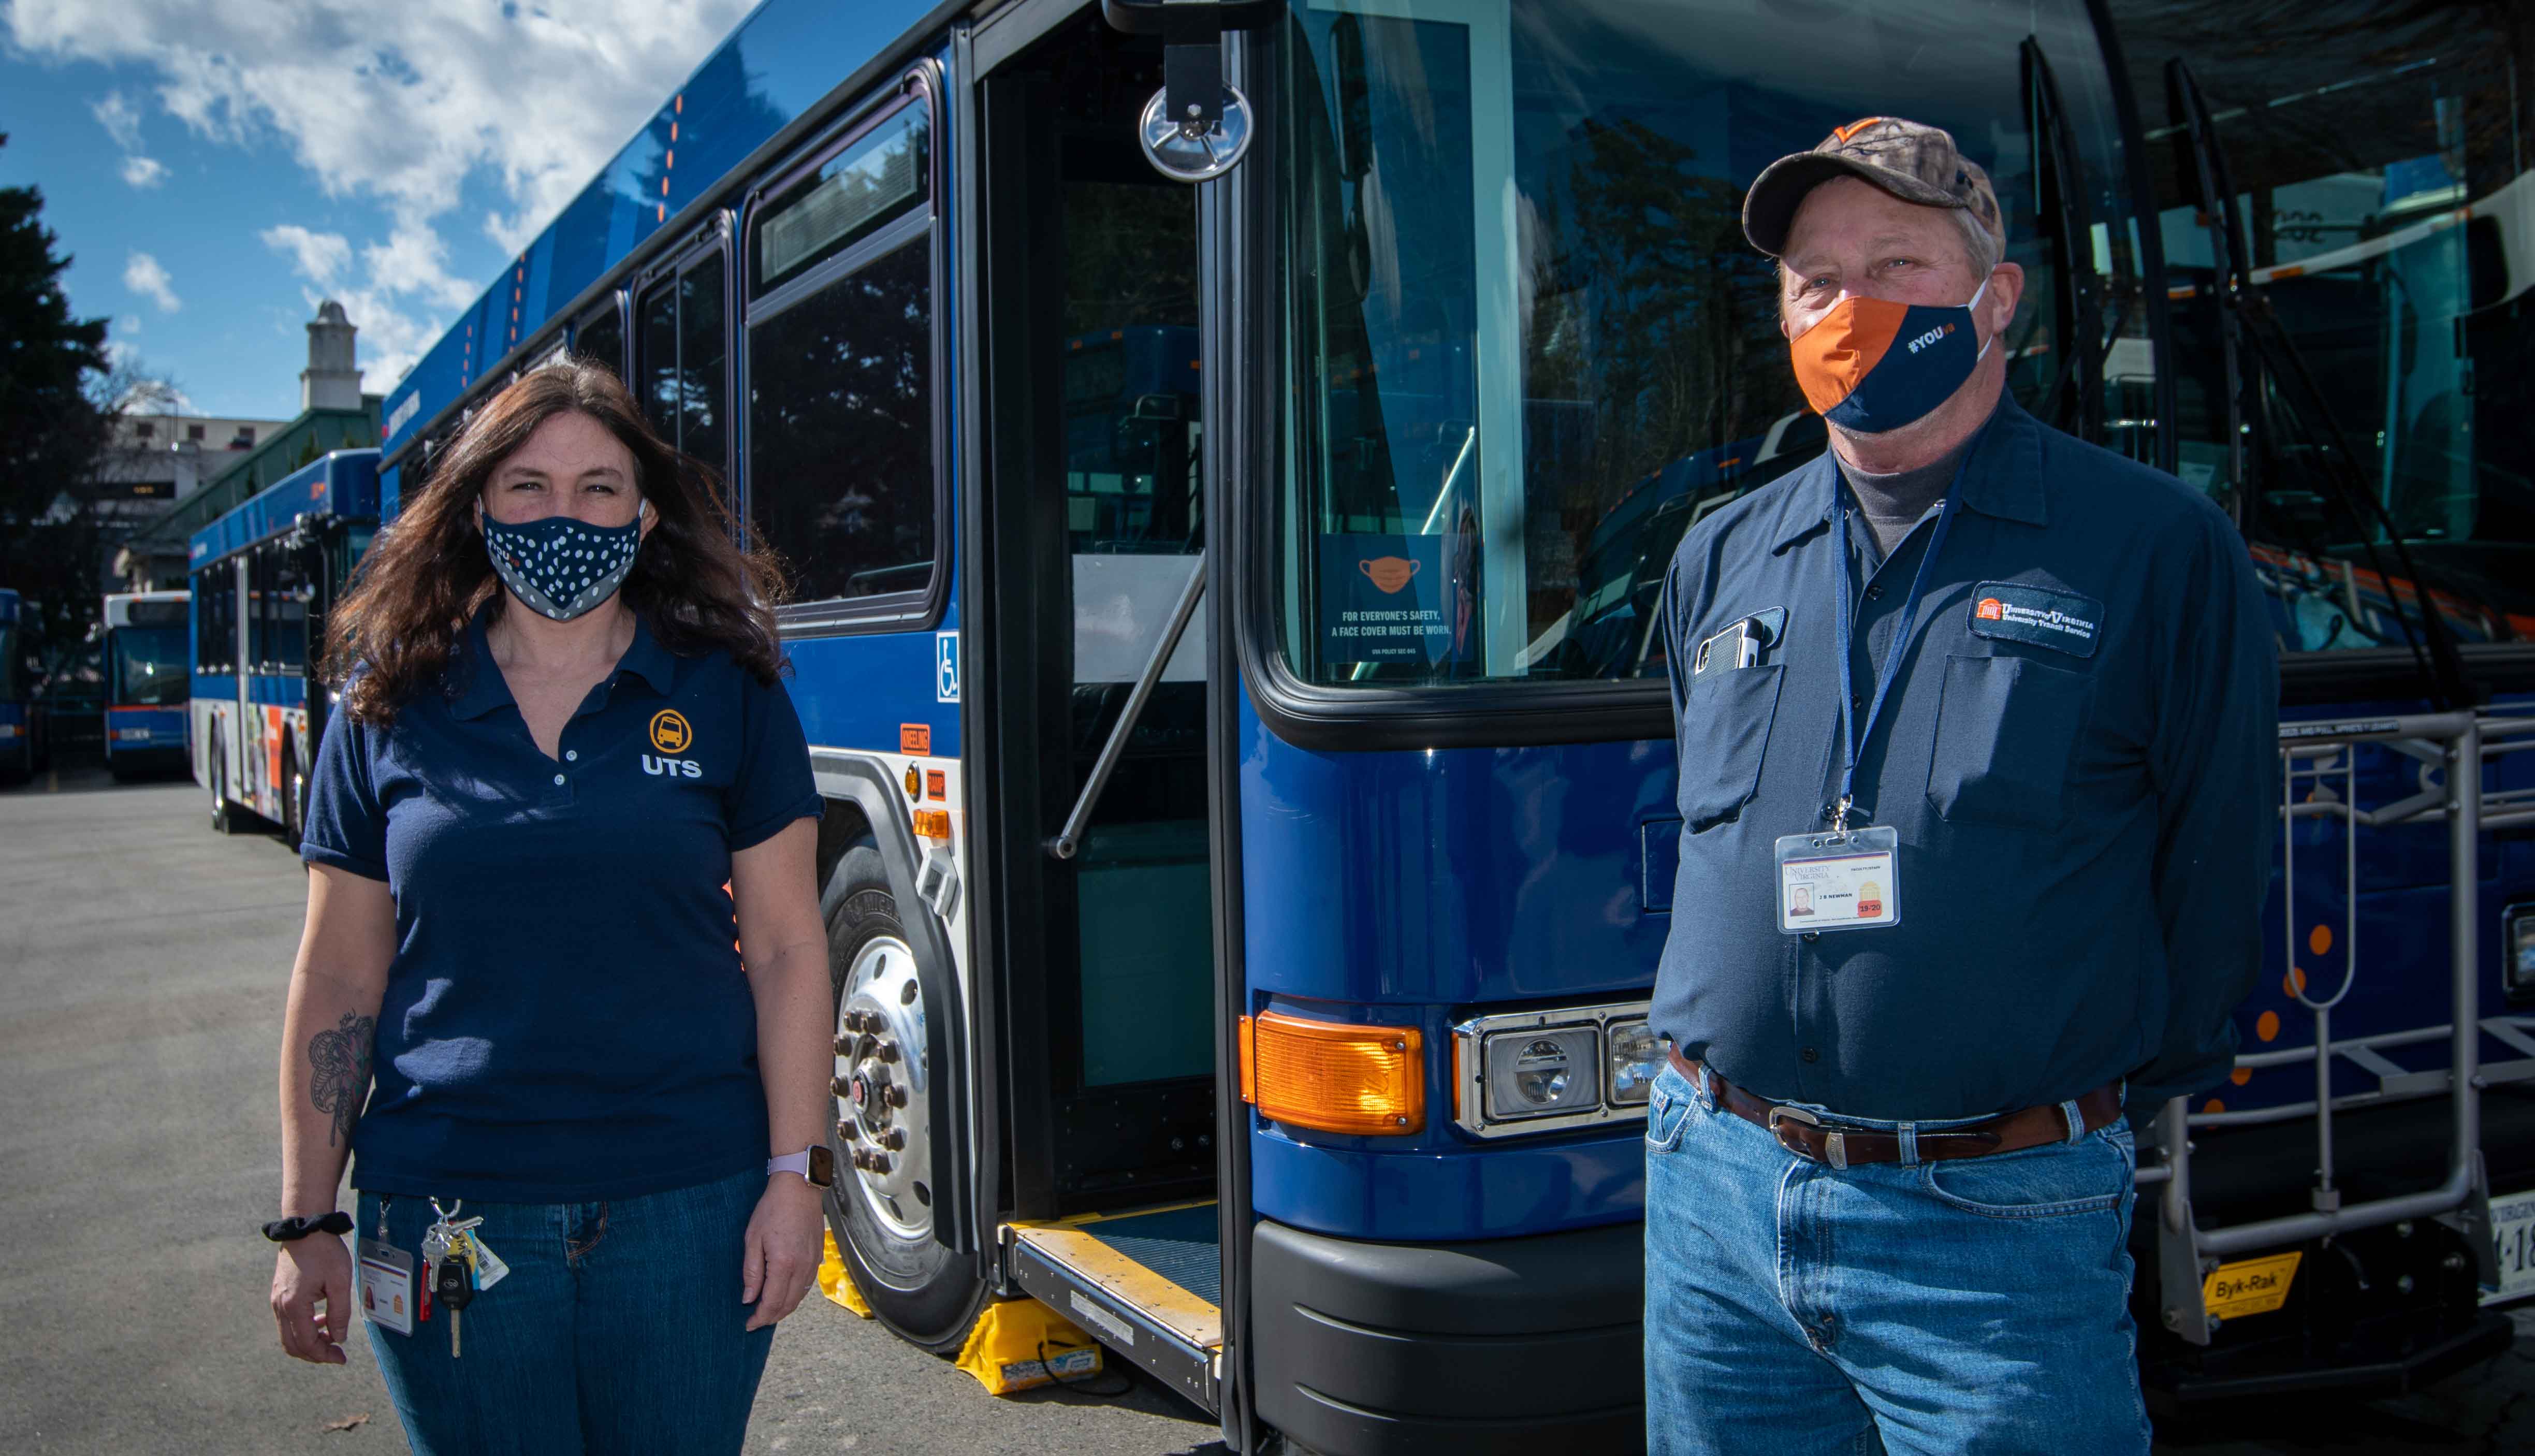 UTS bus drivers wearing YouVA masks